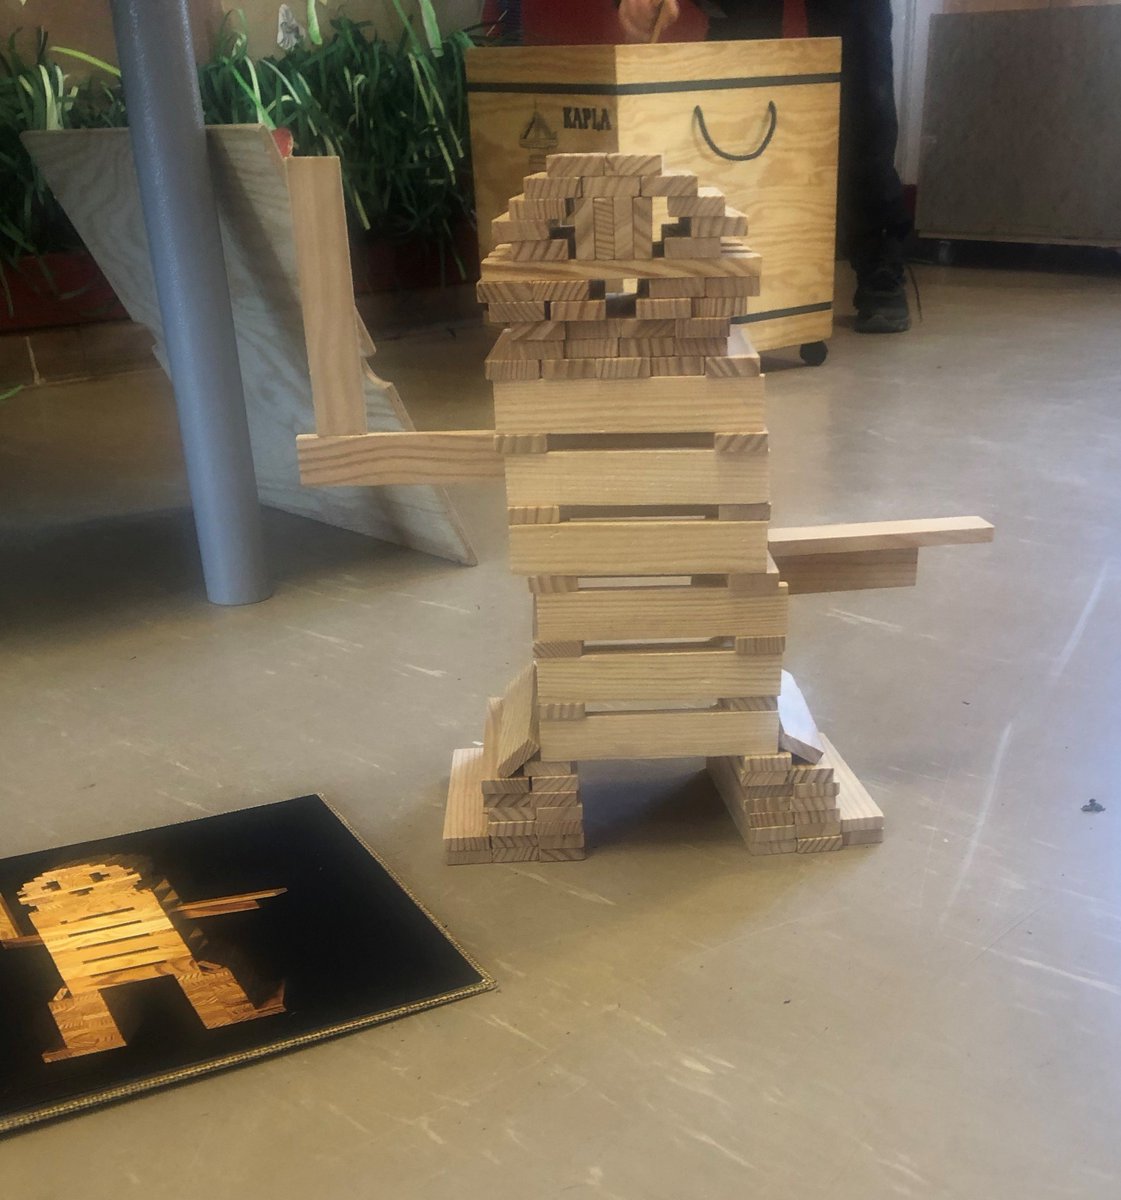 Kai has made this amazing robot using @kapla planks today👏